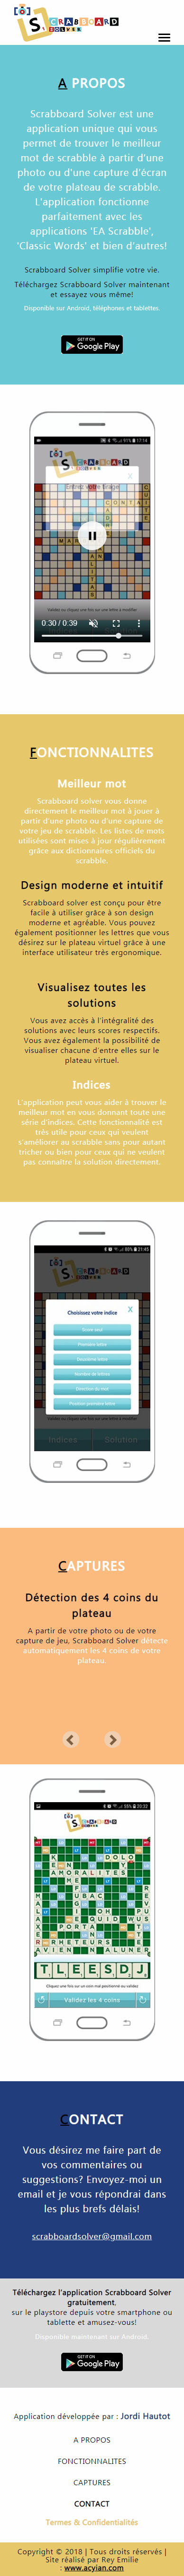 image site Scrabboard Solver vue smartphone